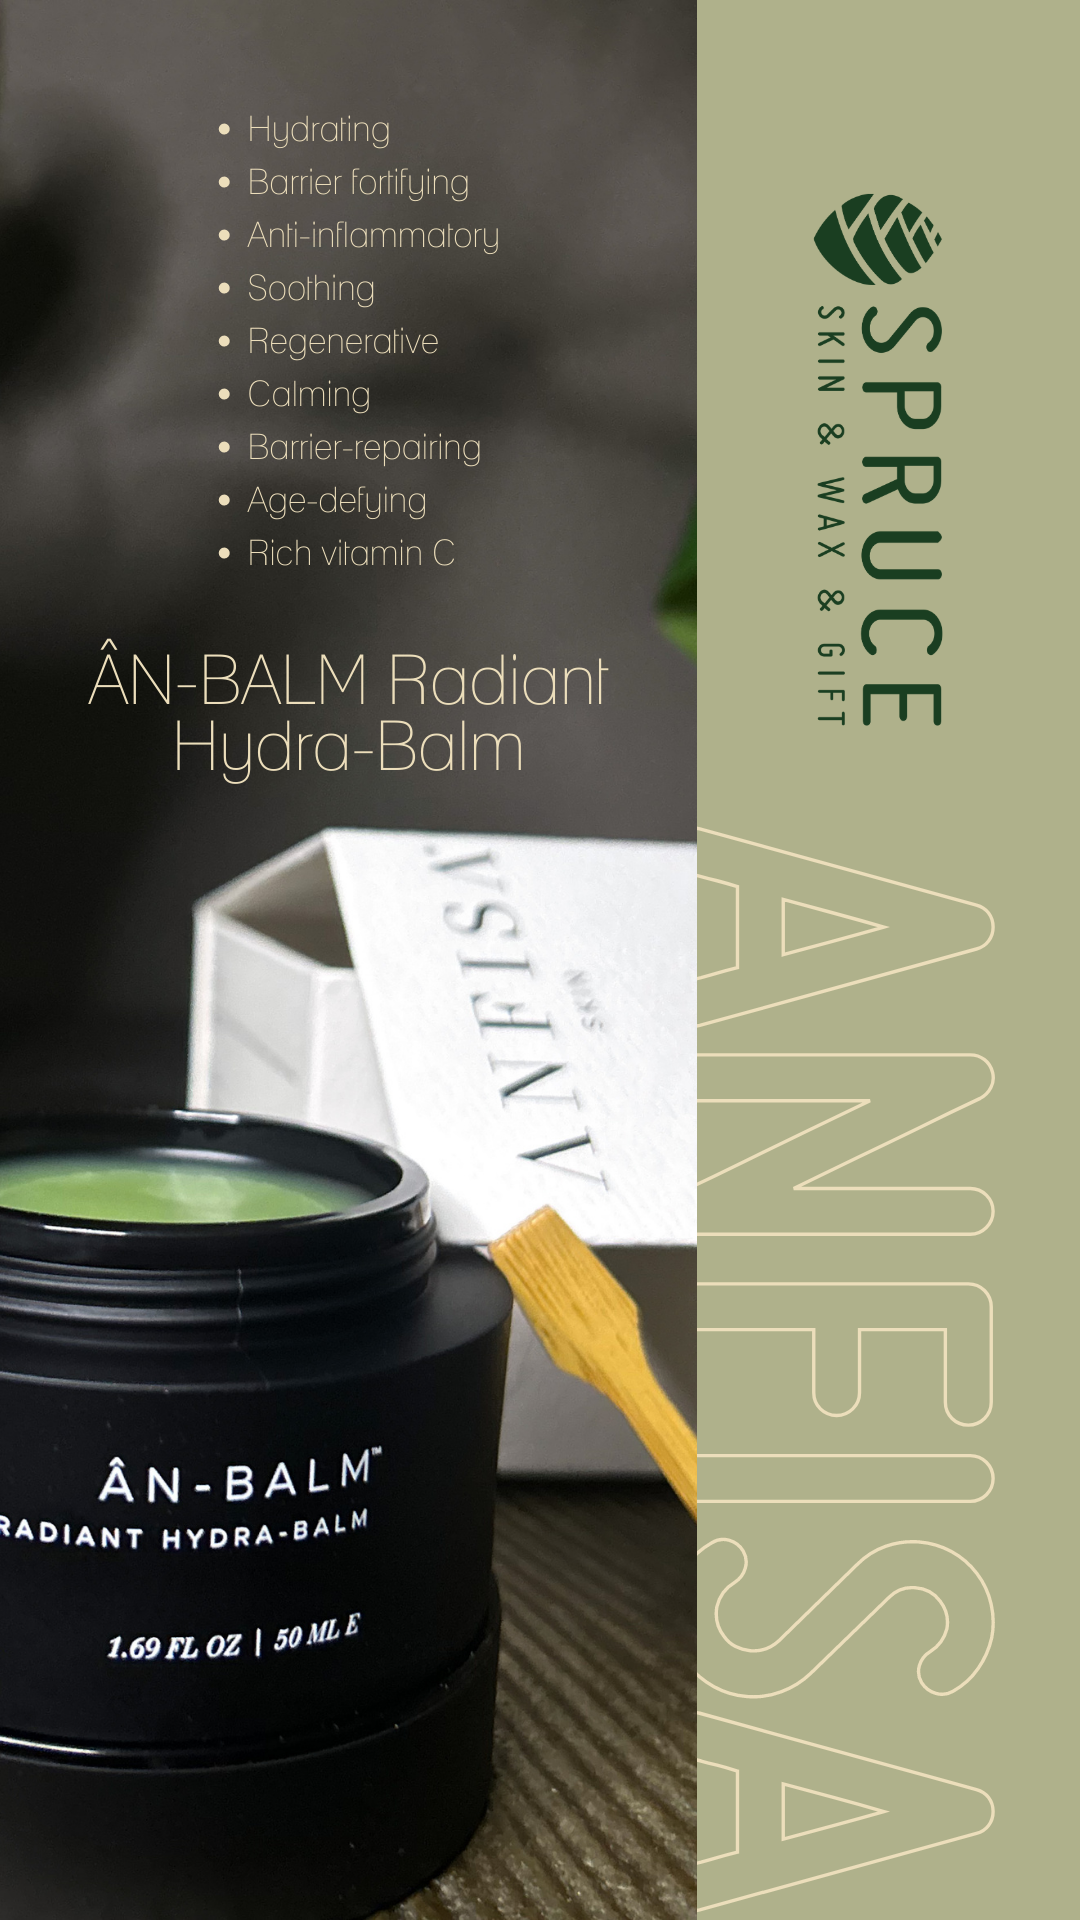 ANFISA - AN-BALM Radiant Hydra-Balm